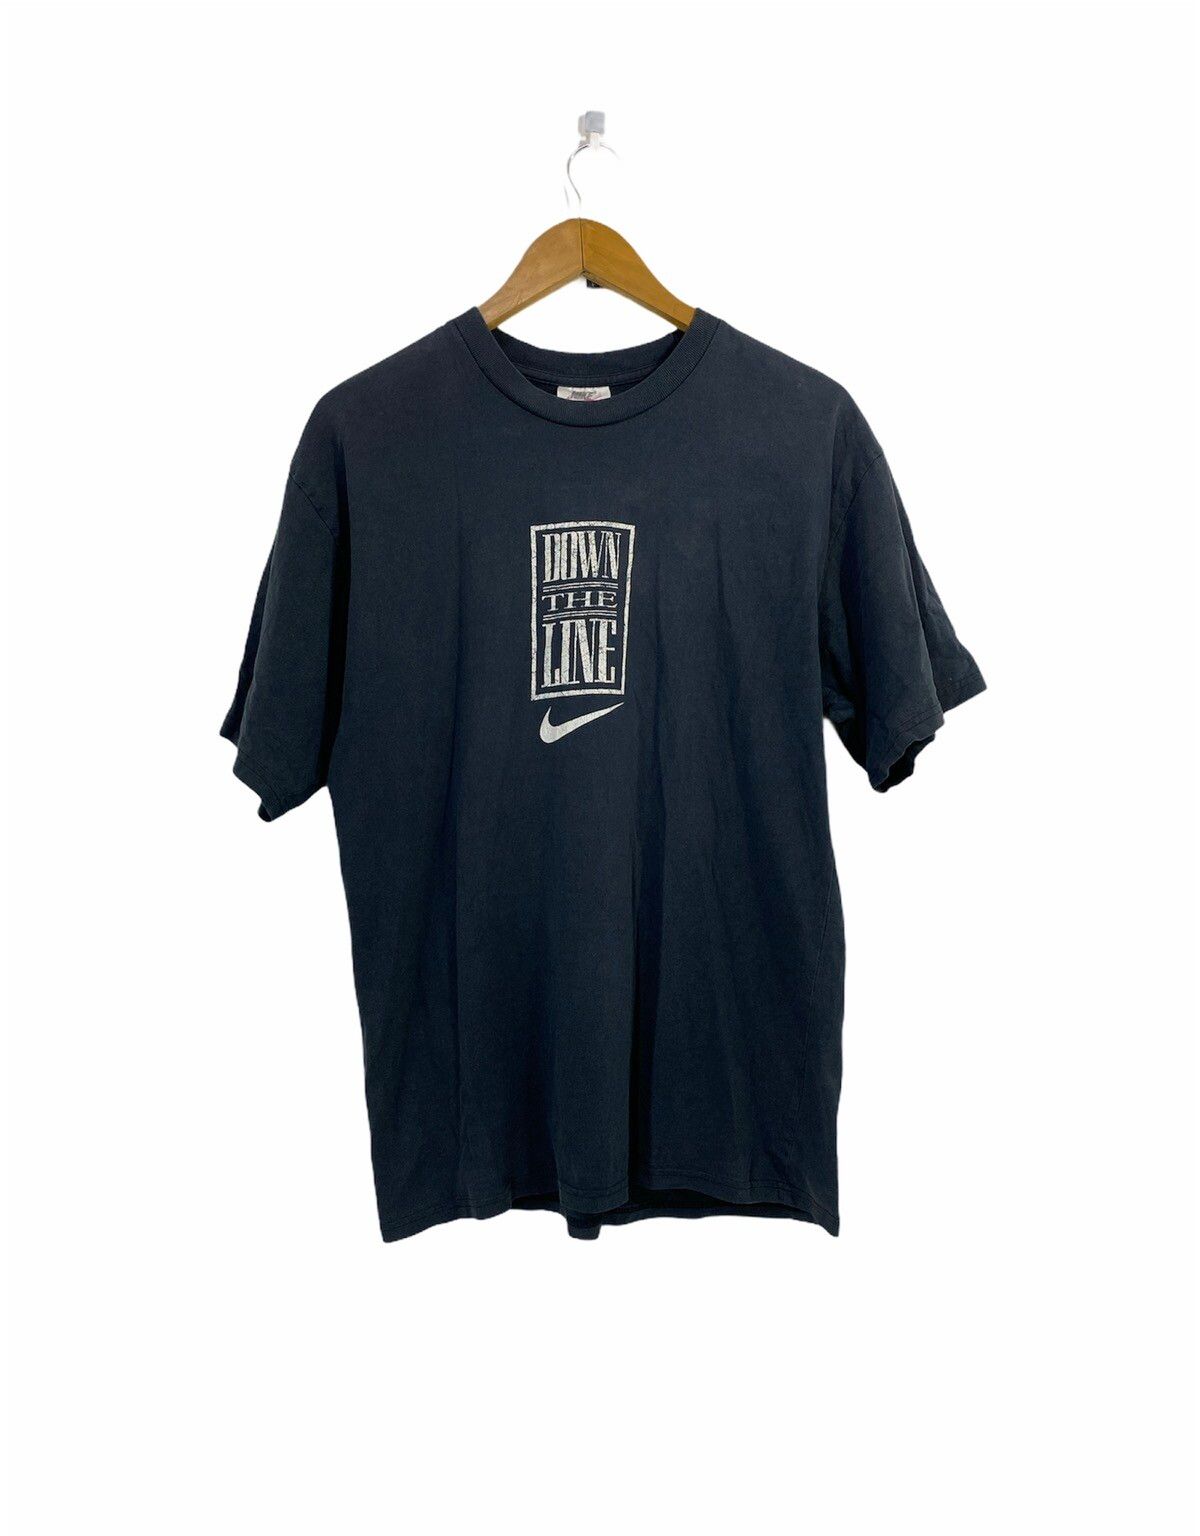 Vintage 90’s Nike Shirt 120 MPH Nike Tennis Shirt - 2